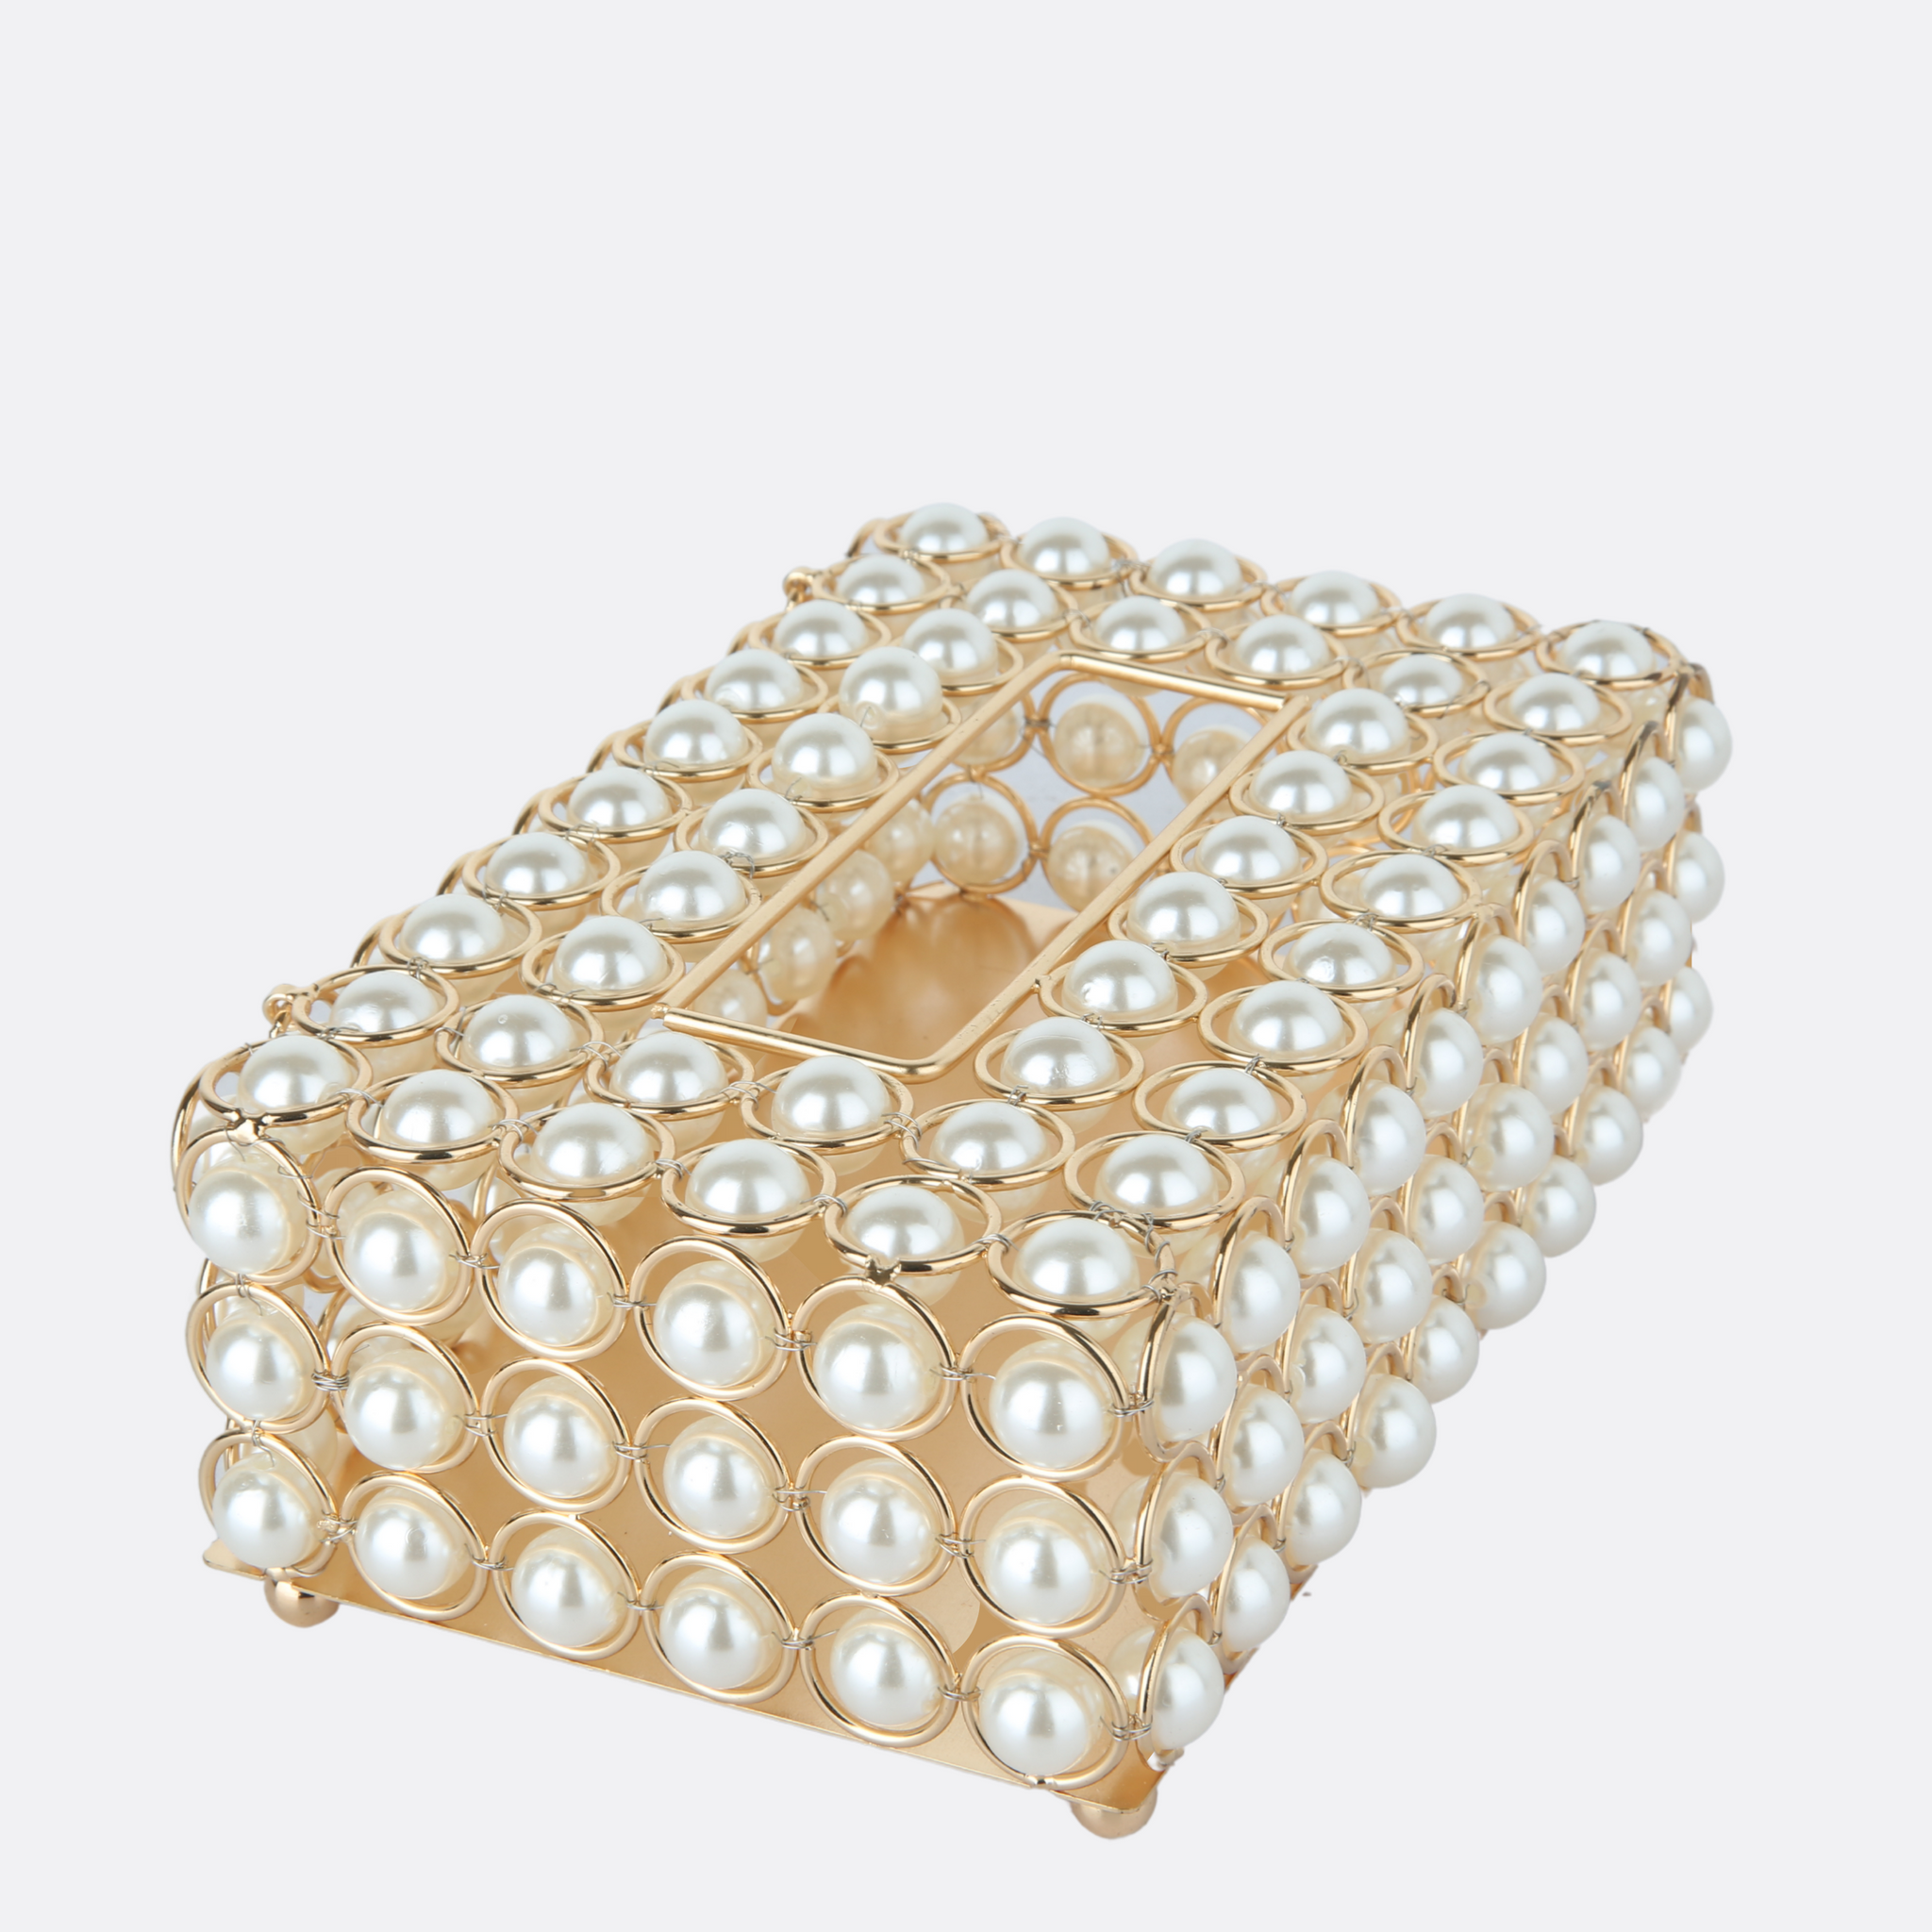 Beads Tissue Box